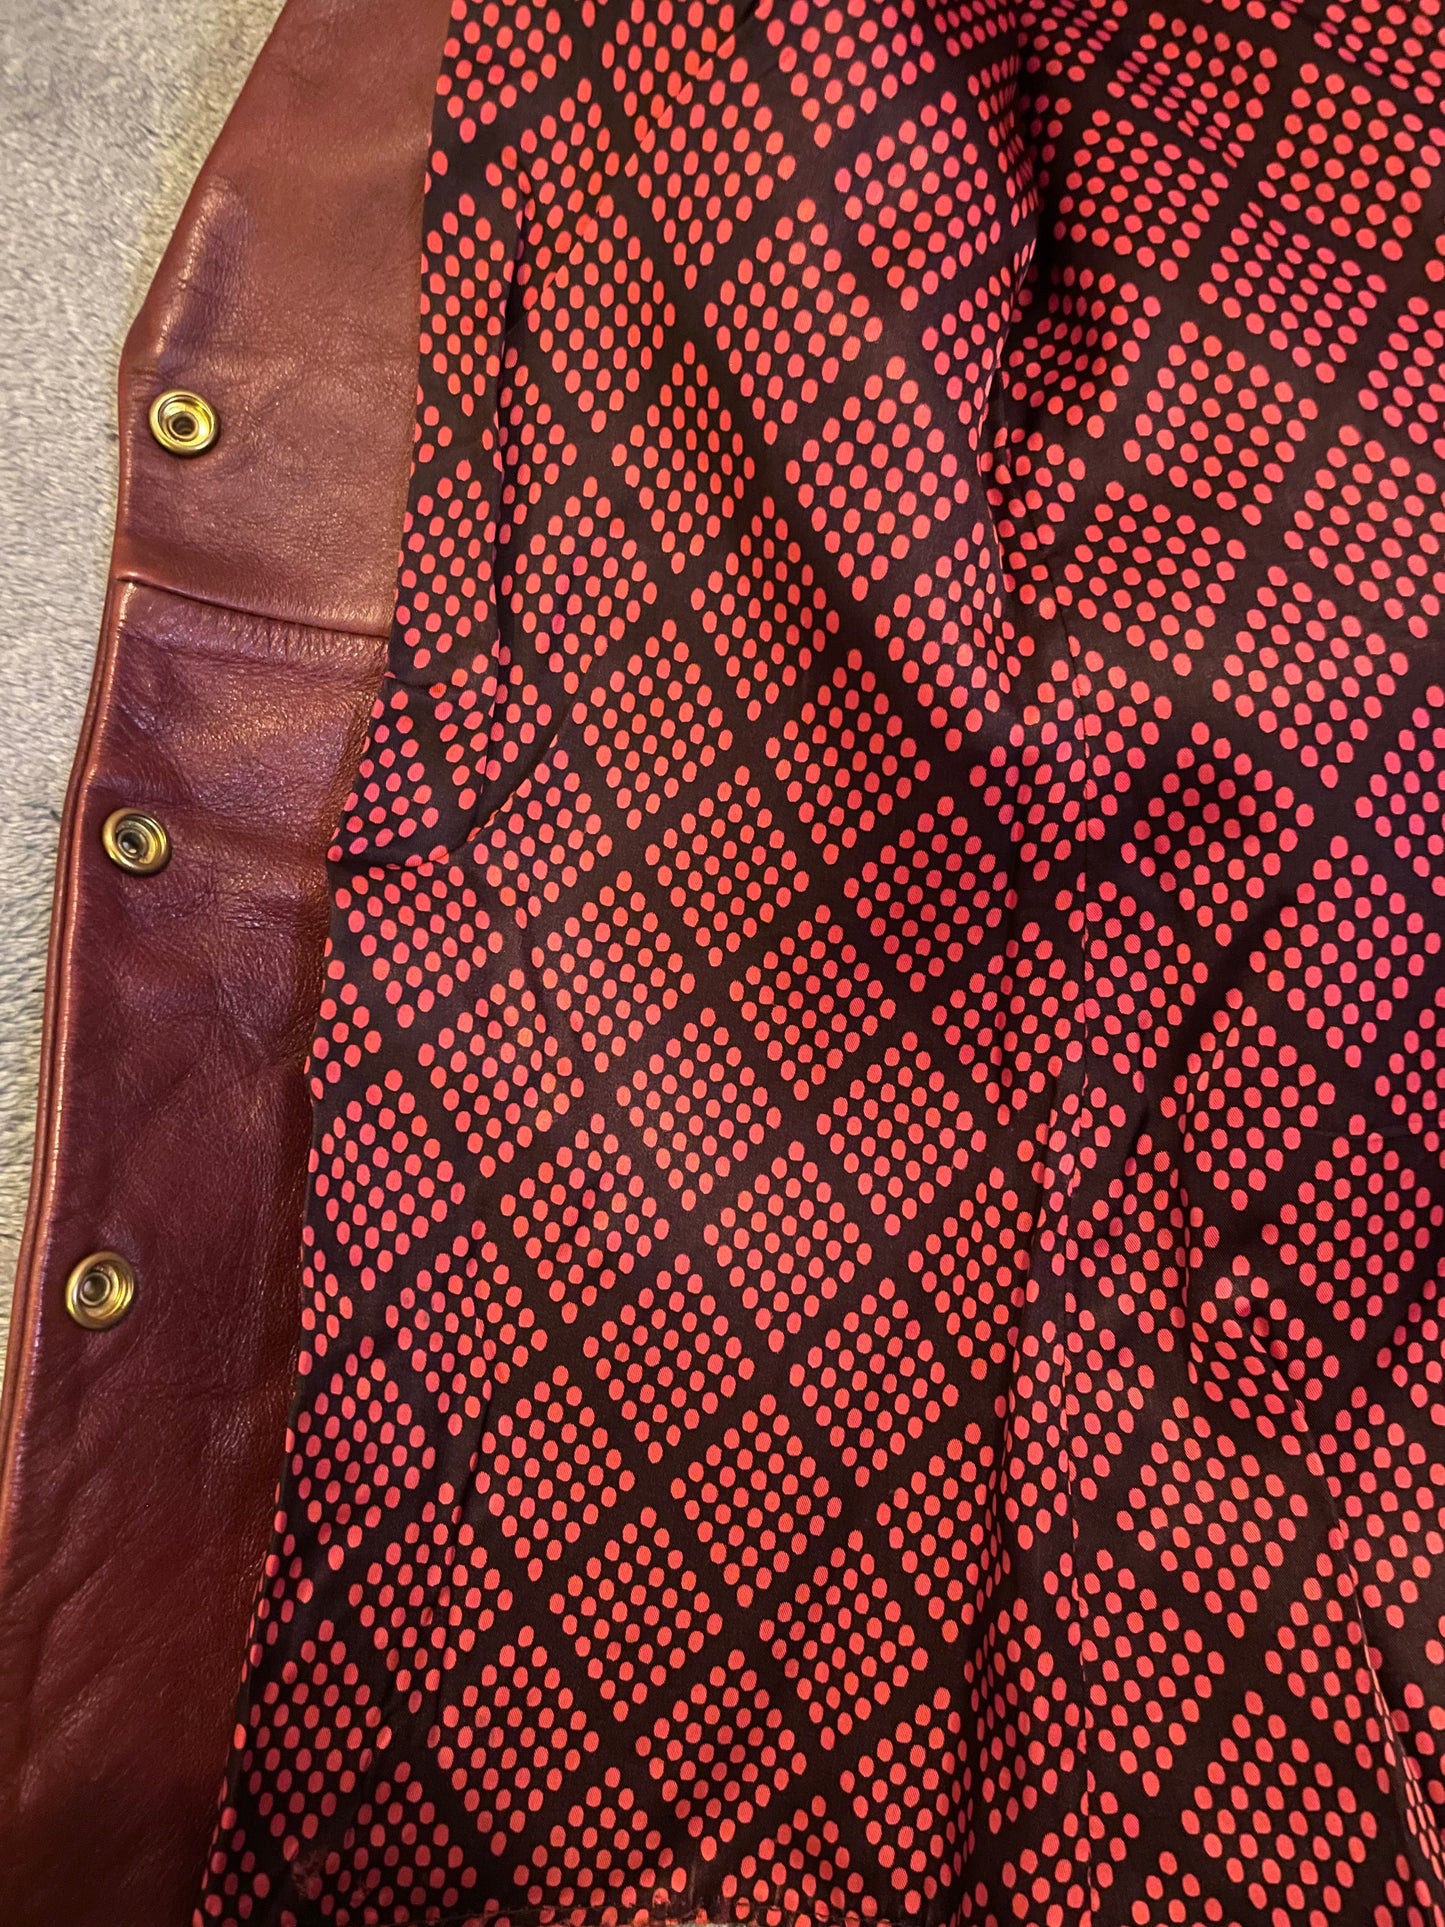 Vintage 1970’s Reddish Brown Heavy Leather Jacket